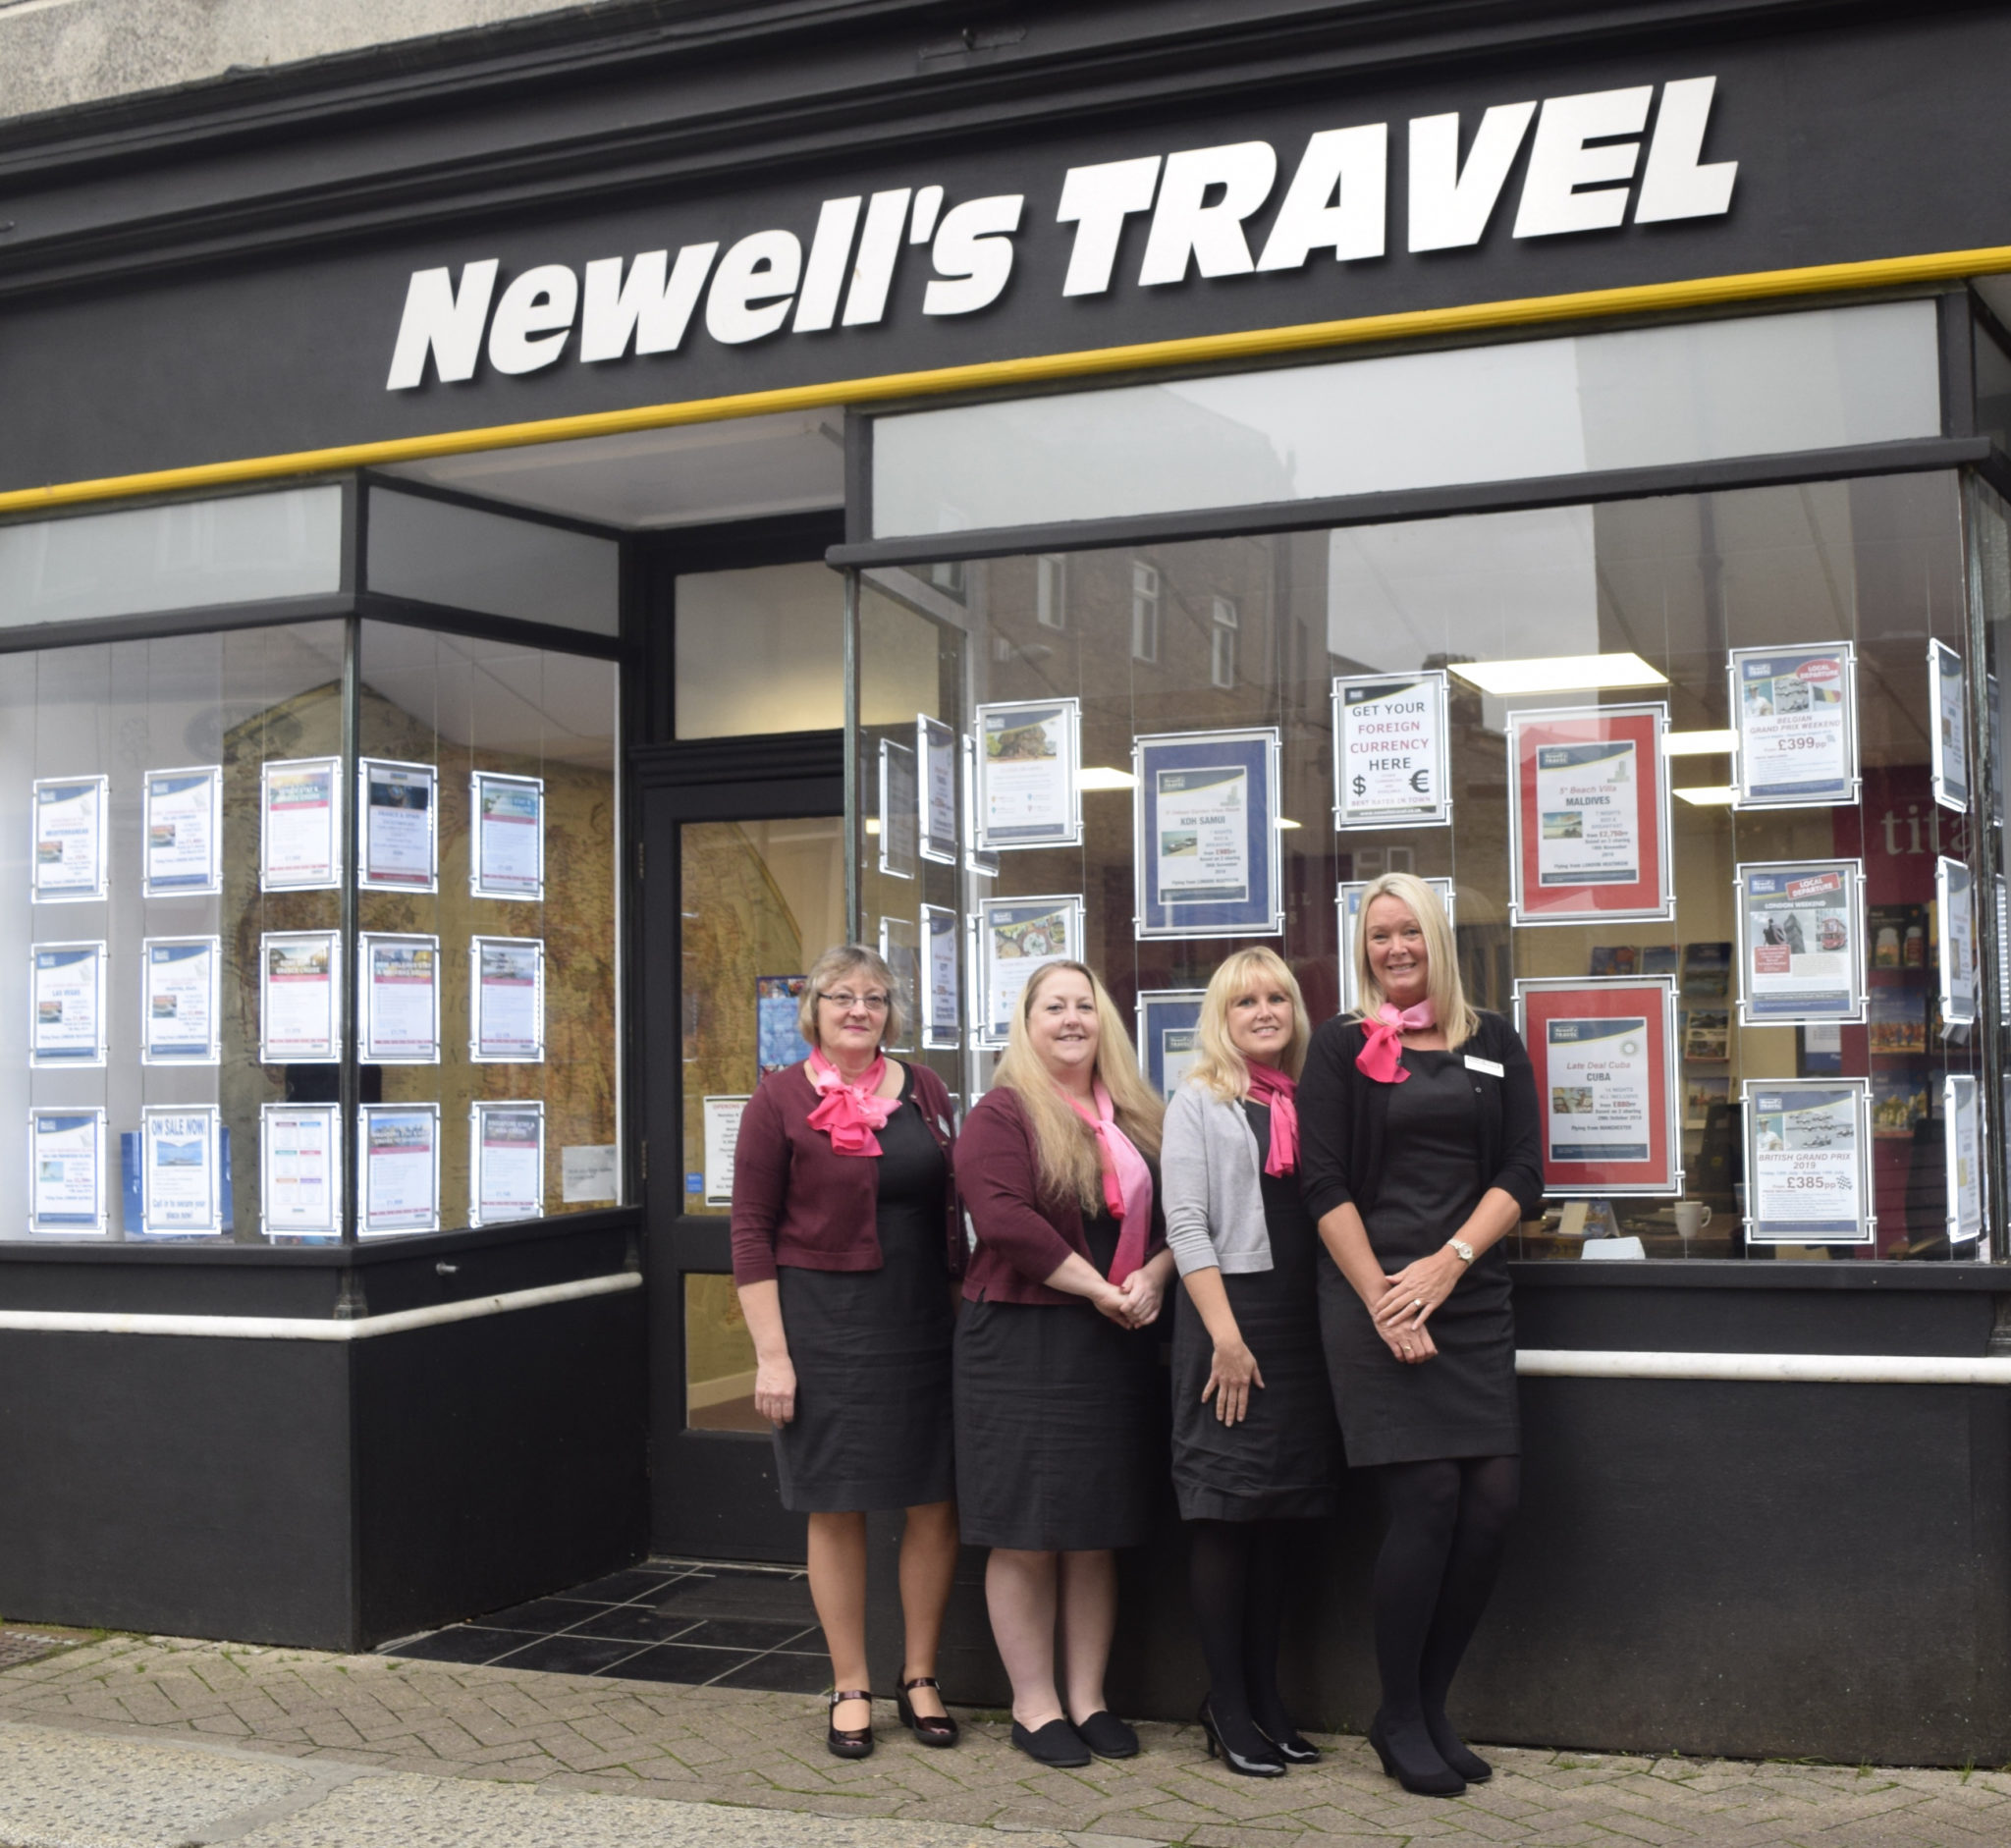 newells travel intranet